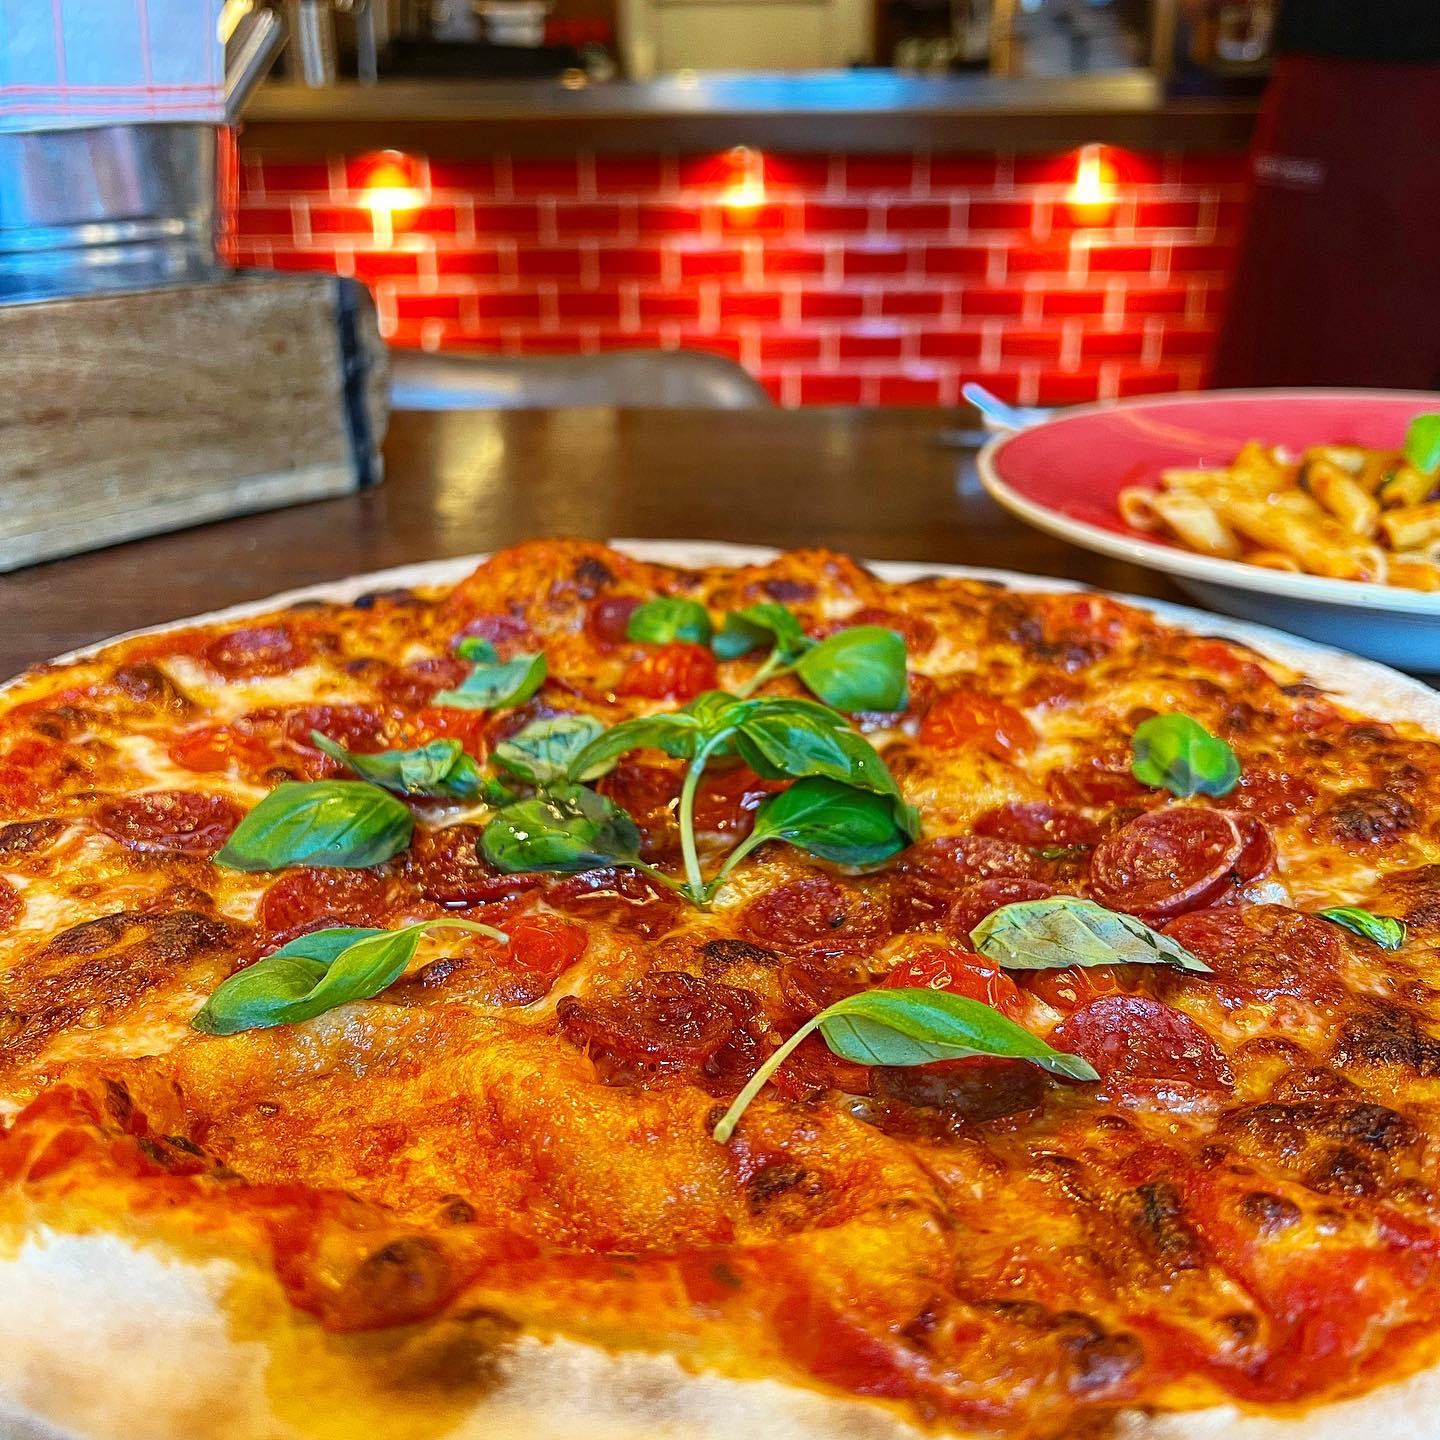 SALSICCIA PICCANTE frisch aus dem Steinofen mit Tomatensugo, Salsiccia, Kirschtomaten, Basilikum und Mozzarella 😋😋😋 

#tanivera #ulm #pizzaepasta #pizzapasta #pizza #pasta #buonappetito #italienischeküche #cucinaitaliana